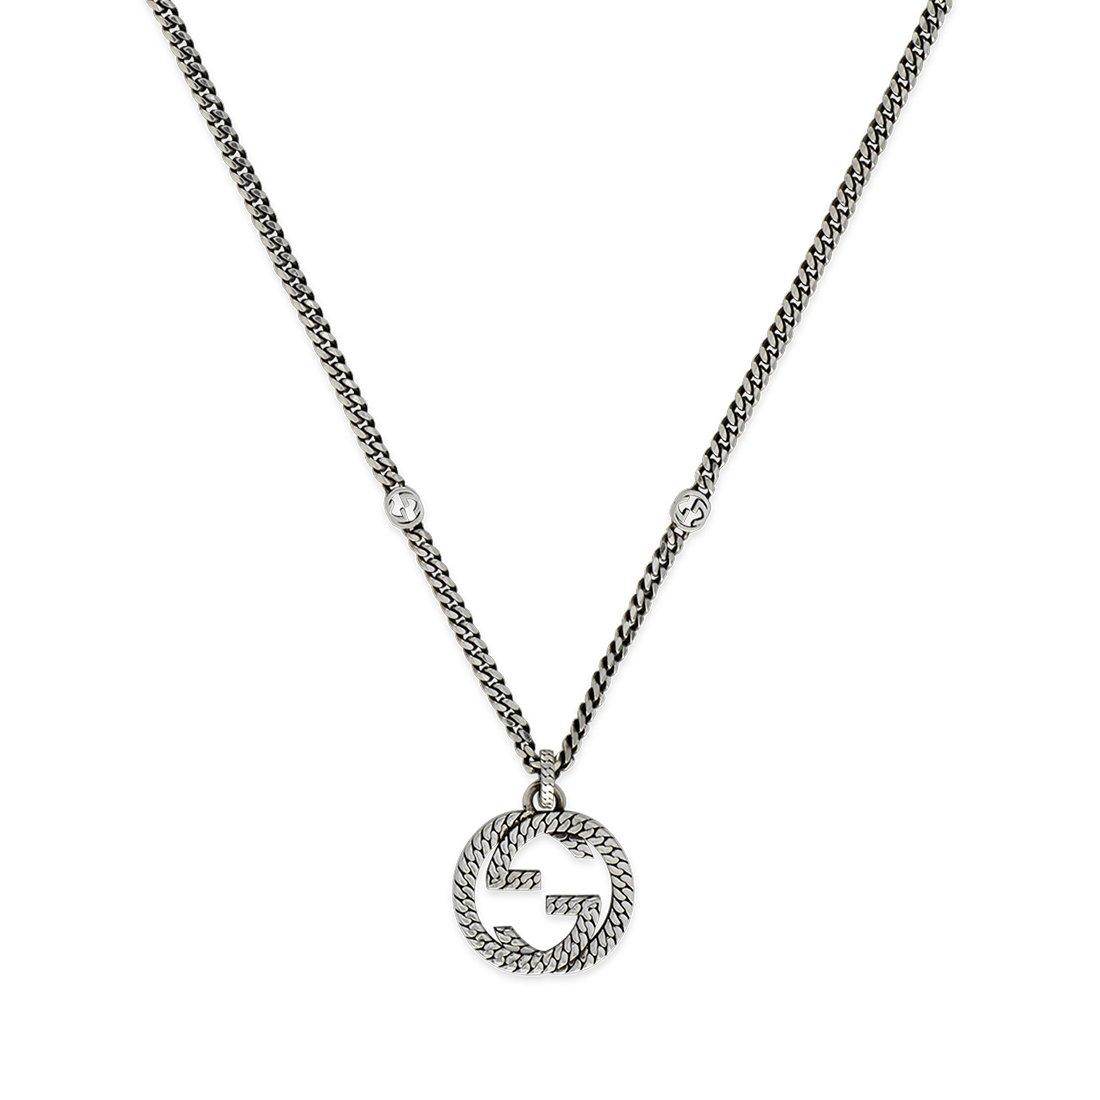 Gucci Interlocking G Silver Pendant | 0128495 | Beaverbrooks the Jewellers